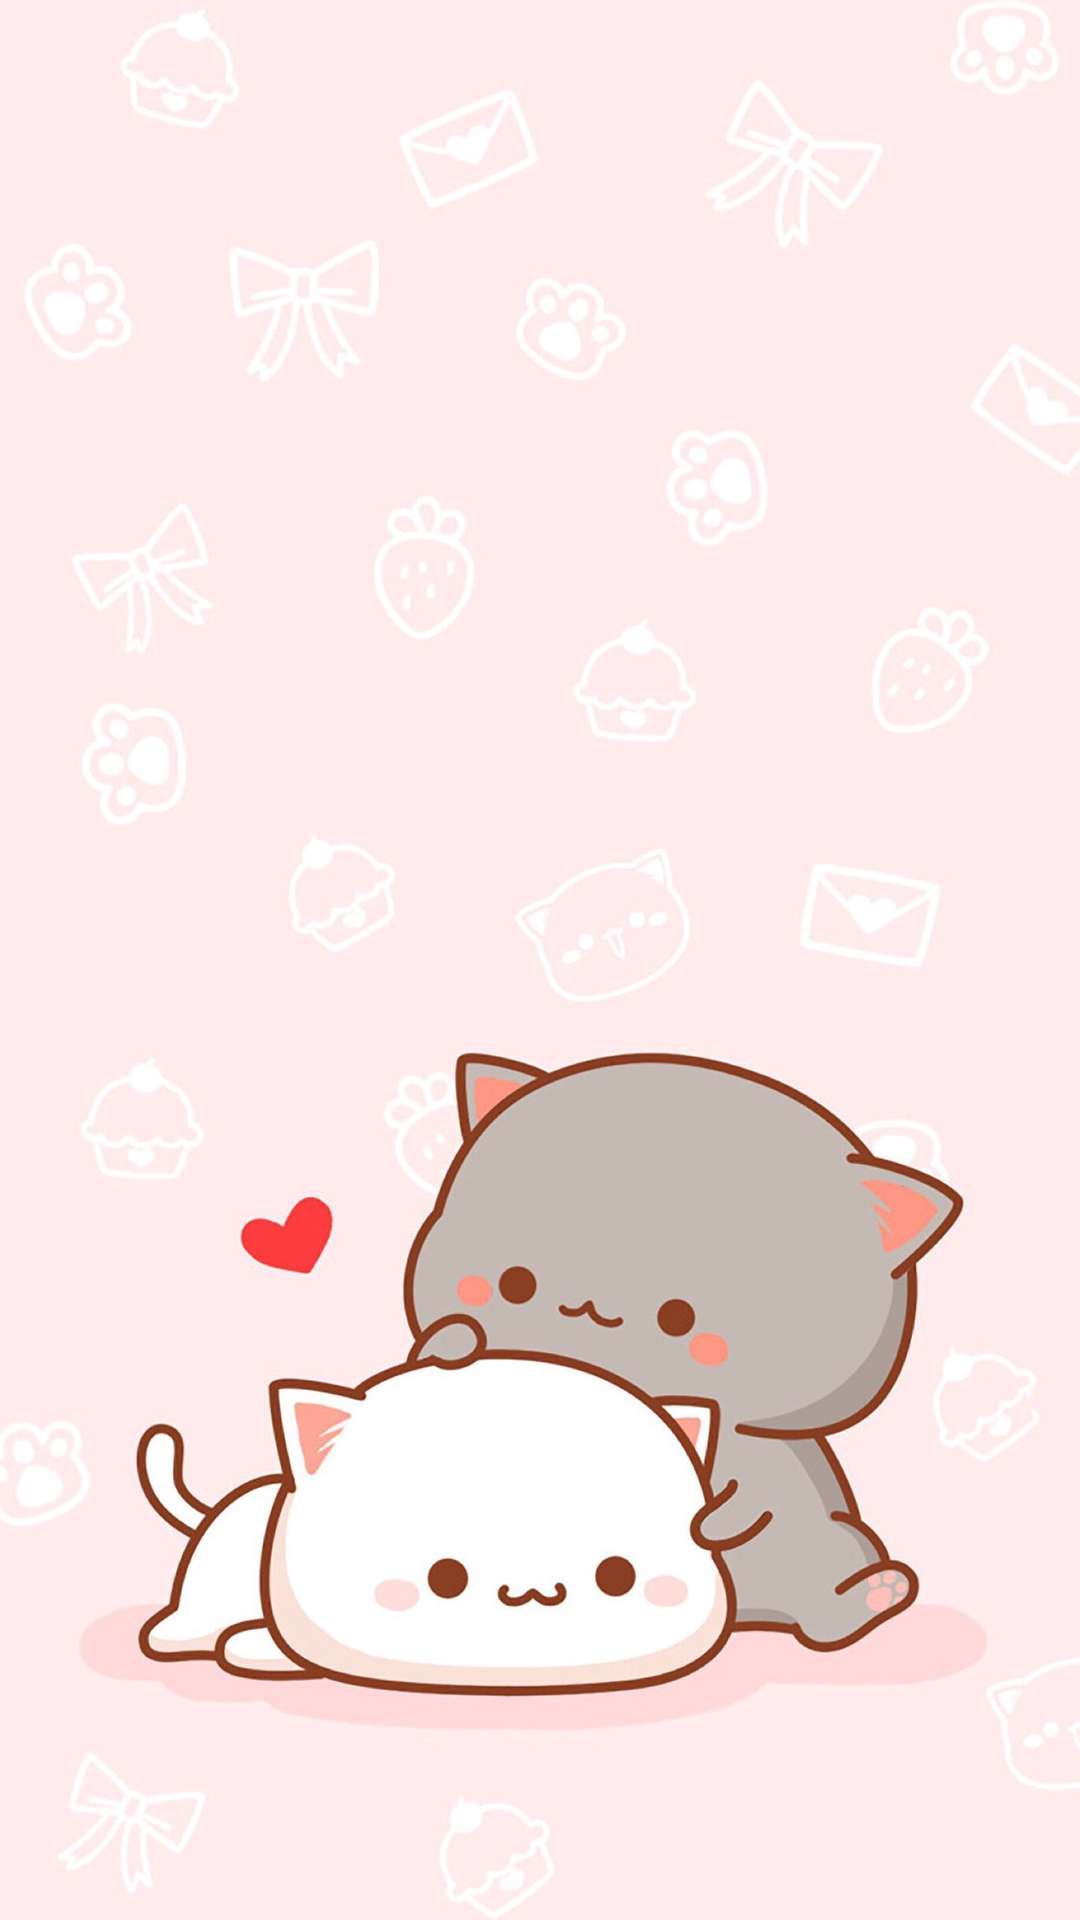 Cat Anime Images - Free Download on Freepik